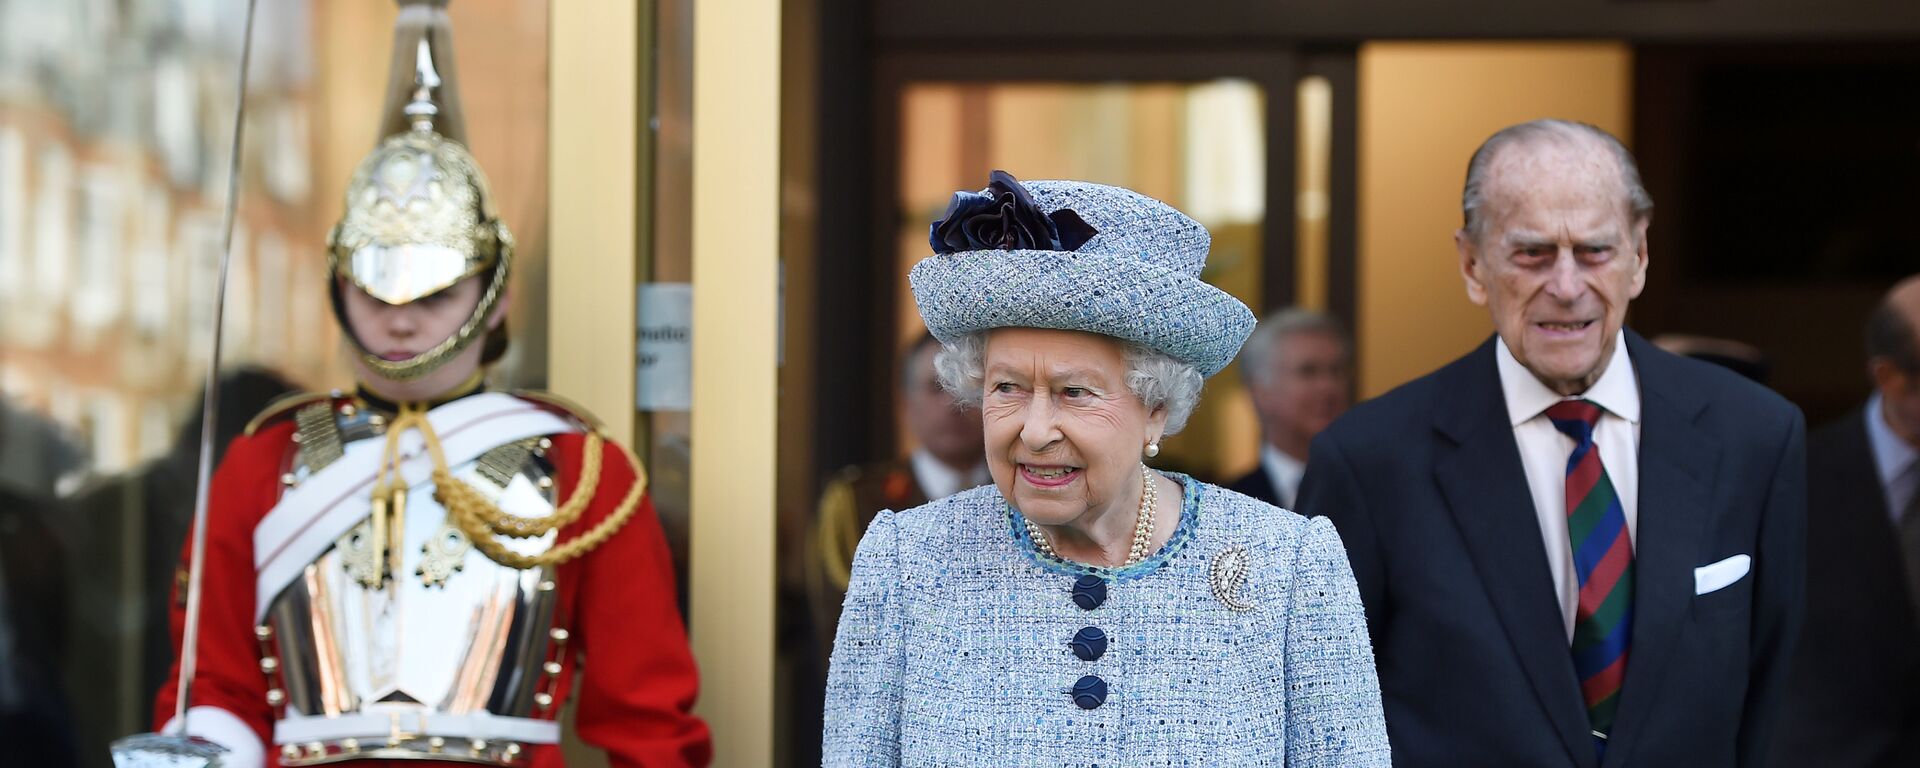 Britain's Queen Elizabeth II and Prince Philip, the Duke of Edinburgh leave the National Army Museum in London, Britain March 16, 2017. REUTERS/Hannah McKay - Sputnik Mundo, 1920, 09.04.2021